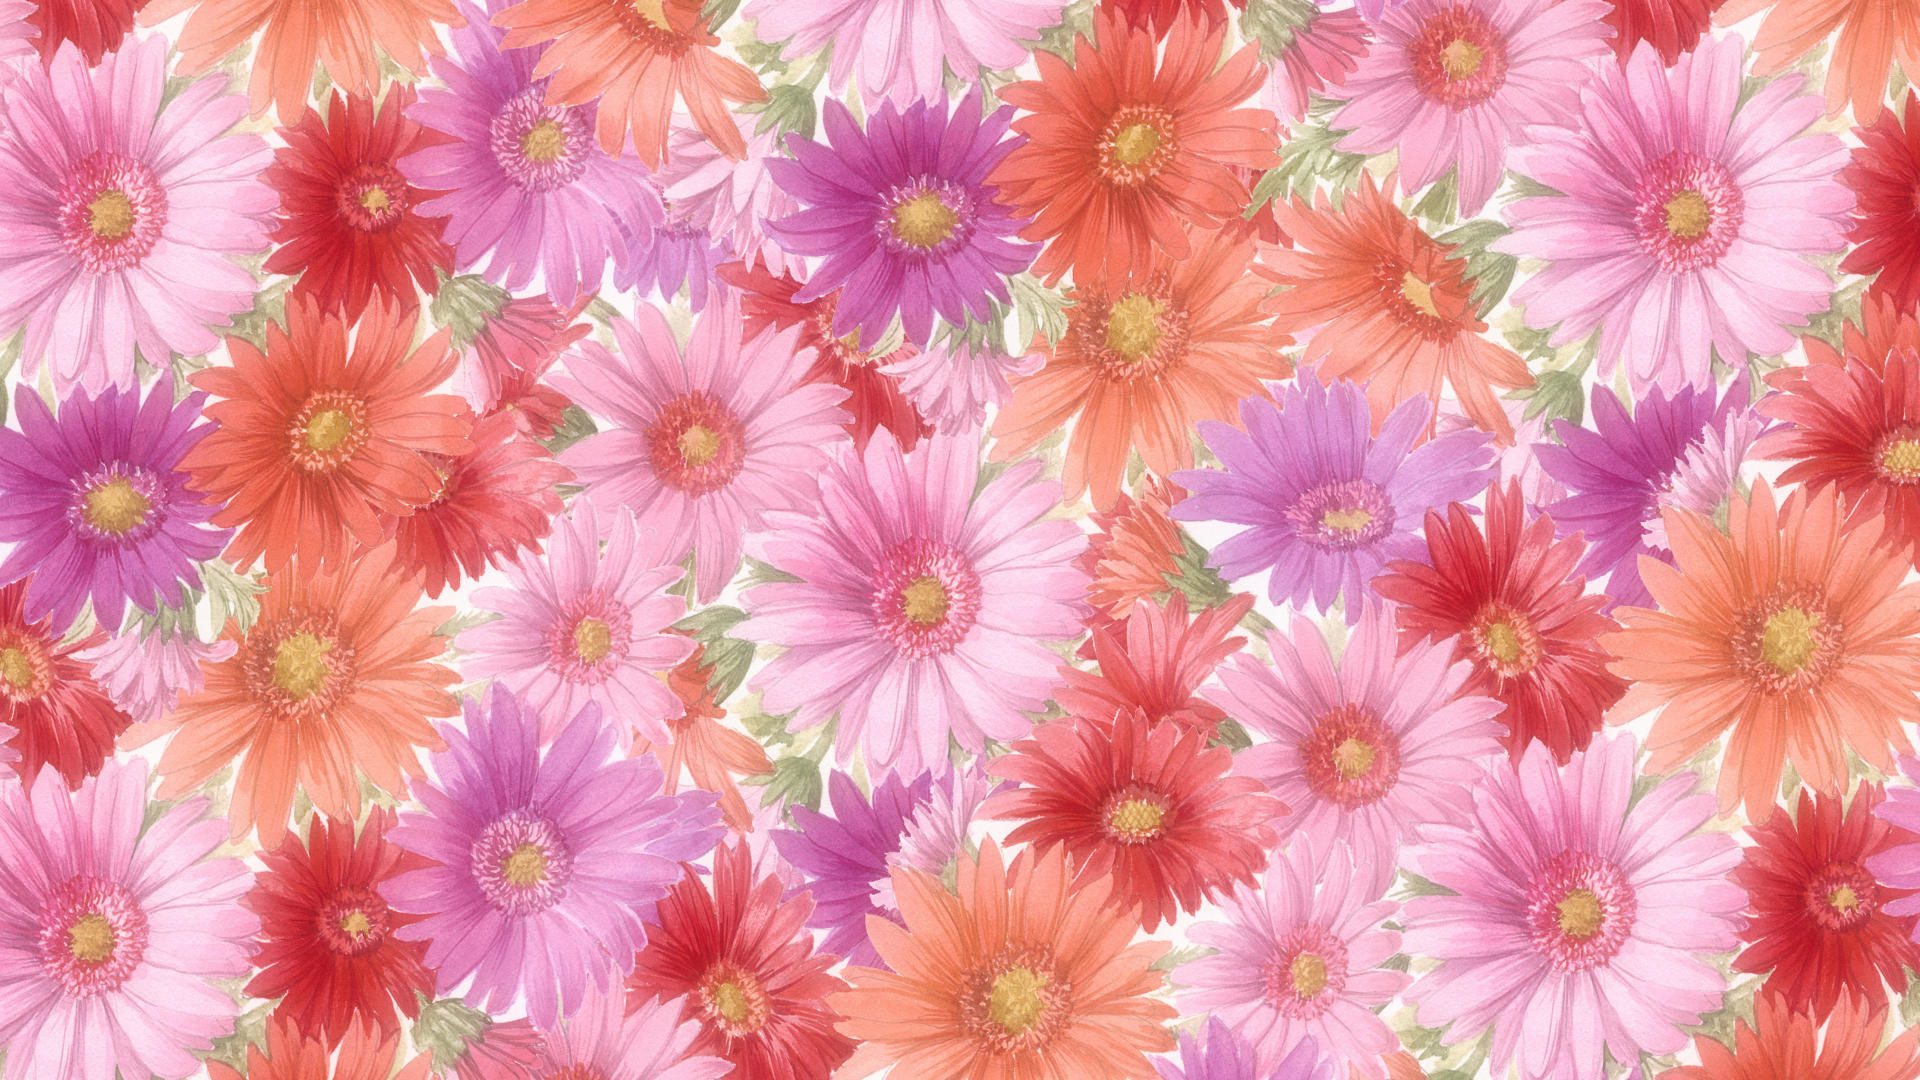 1920x1080 Flowers background | Flower wallpaper | images of flower | #18